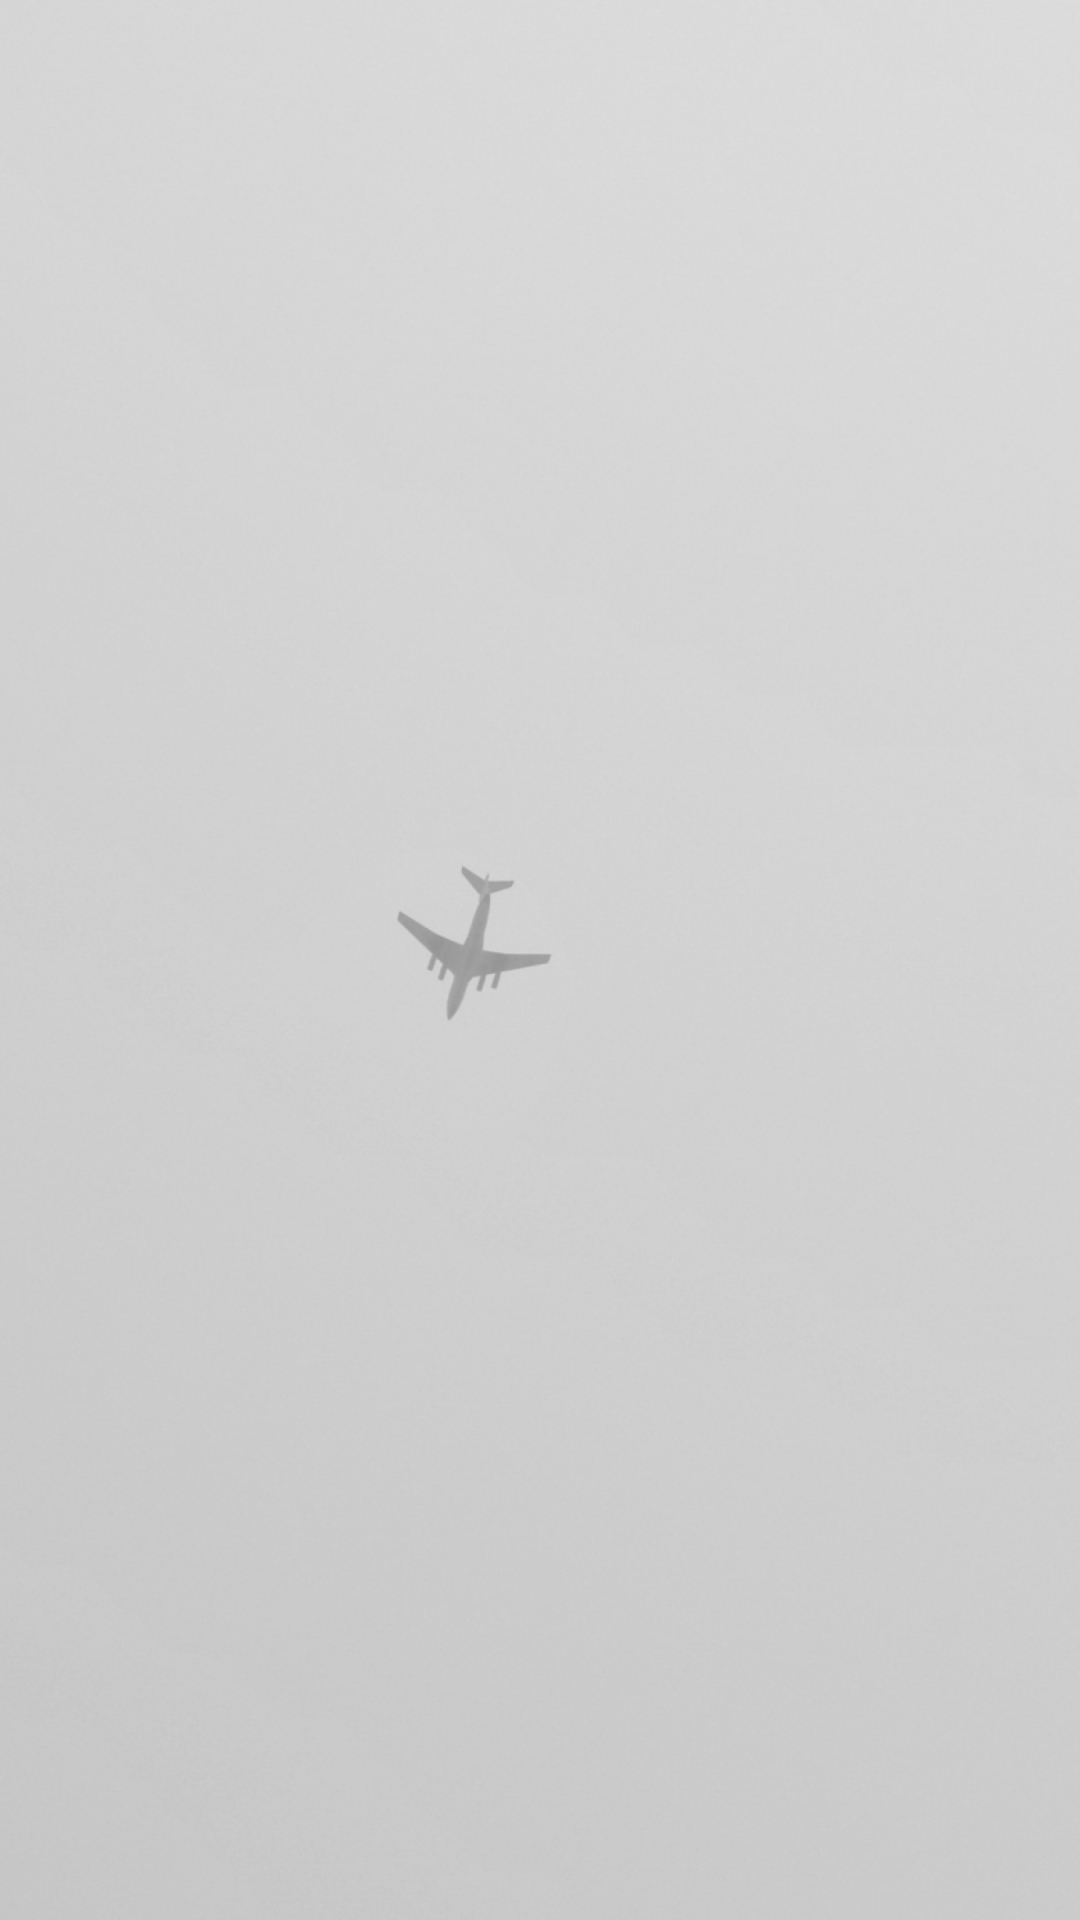 Das Airplane High In The Sky Wallpaper 1080x1920